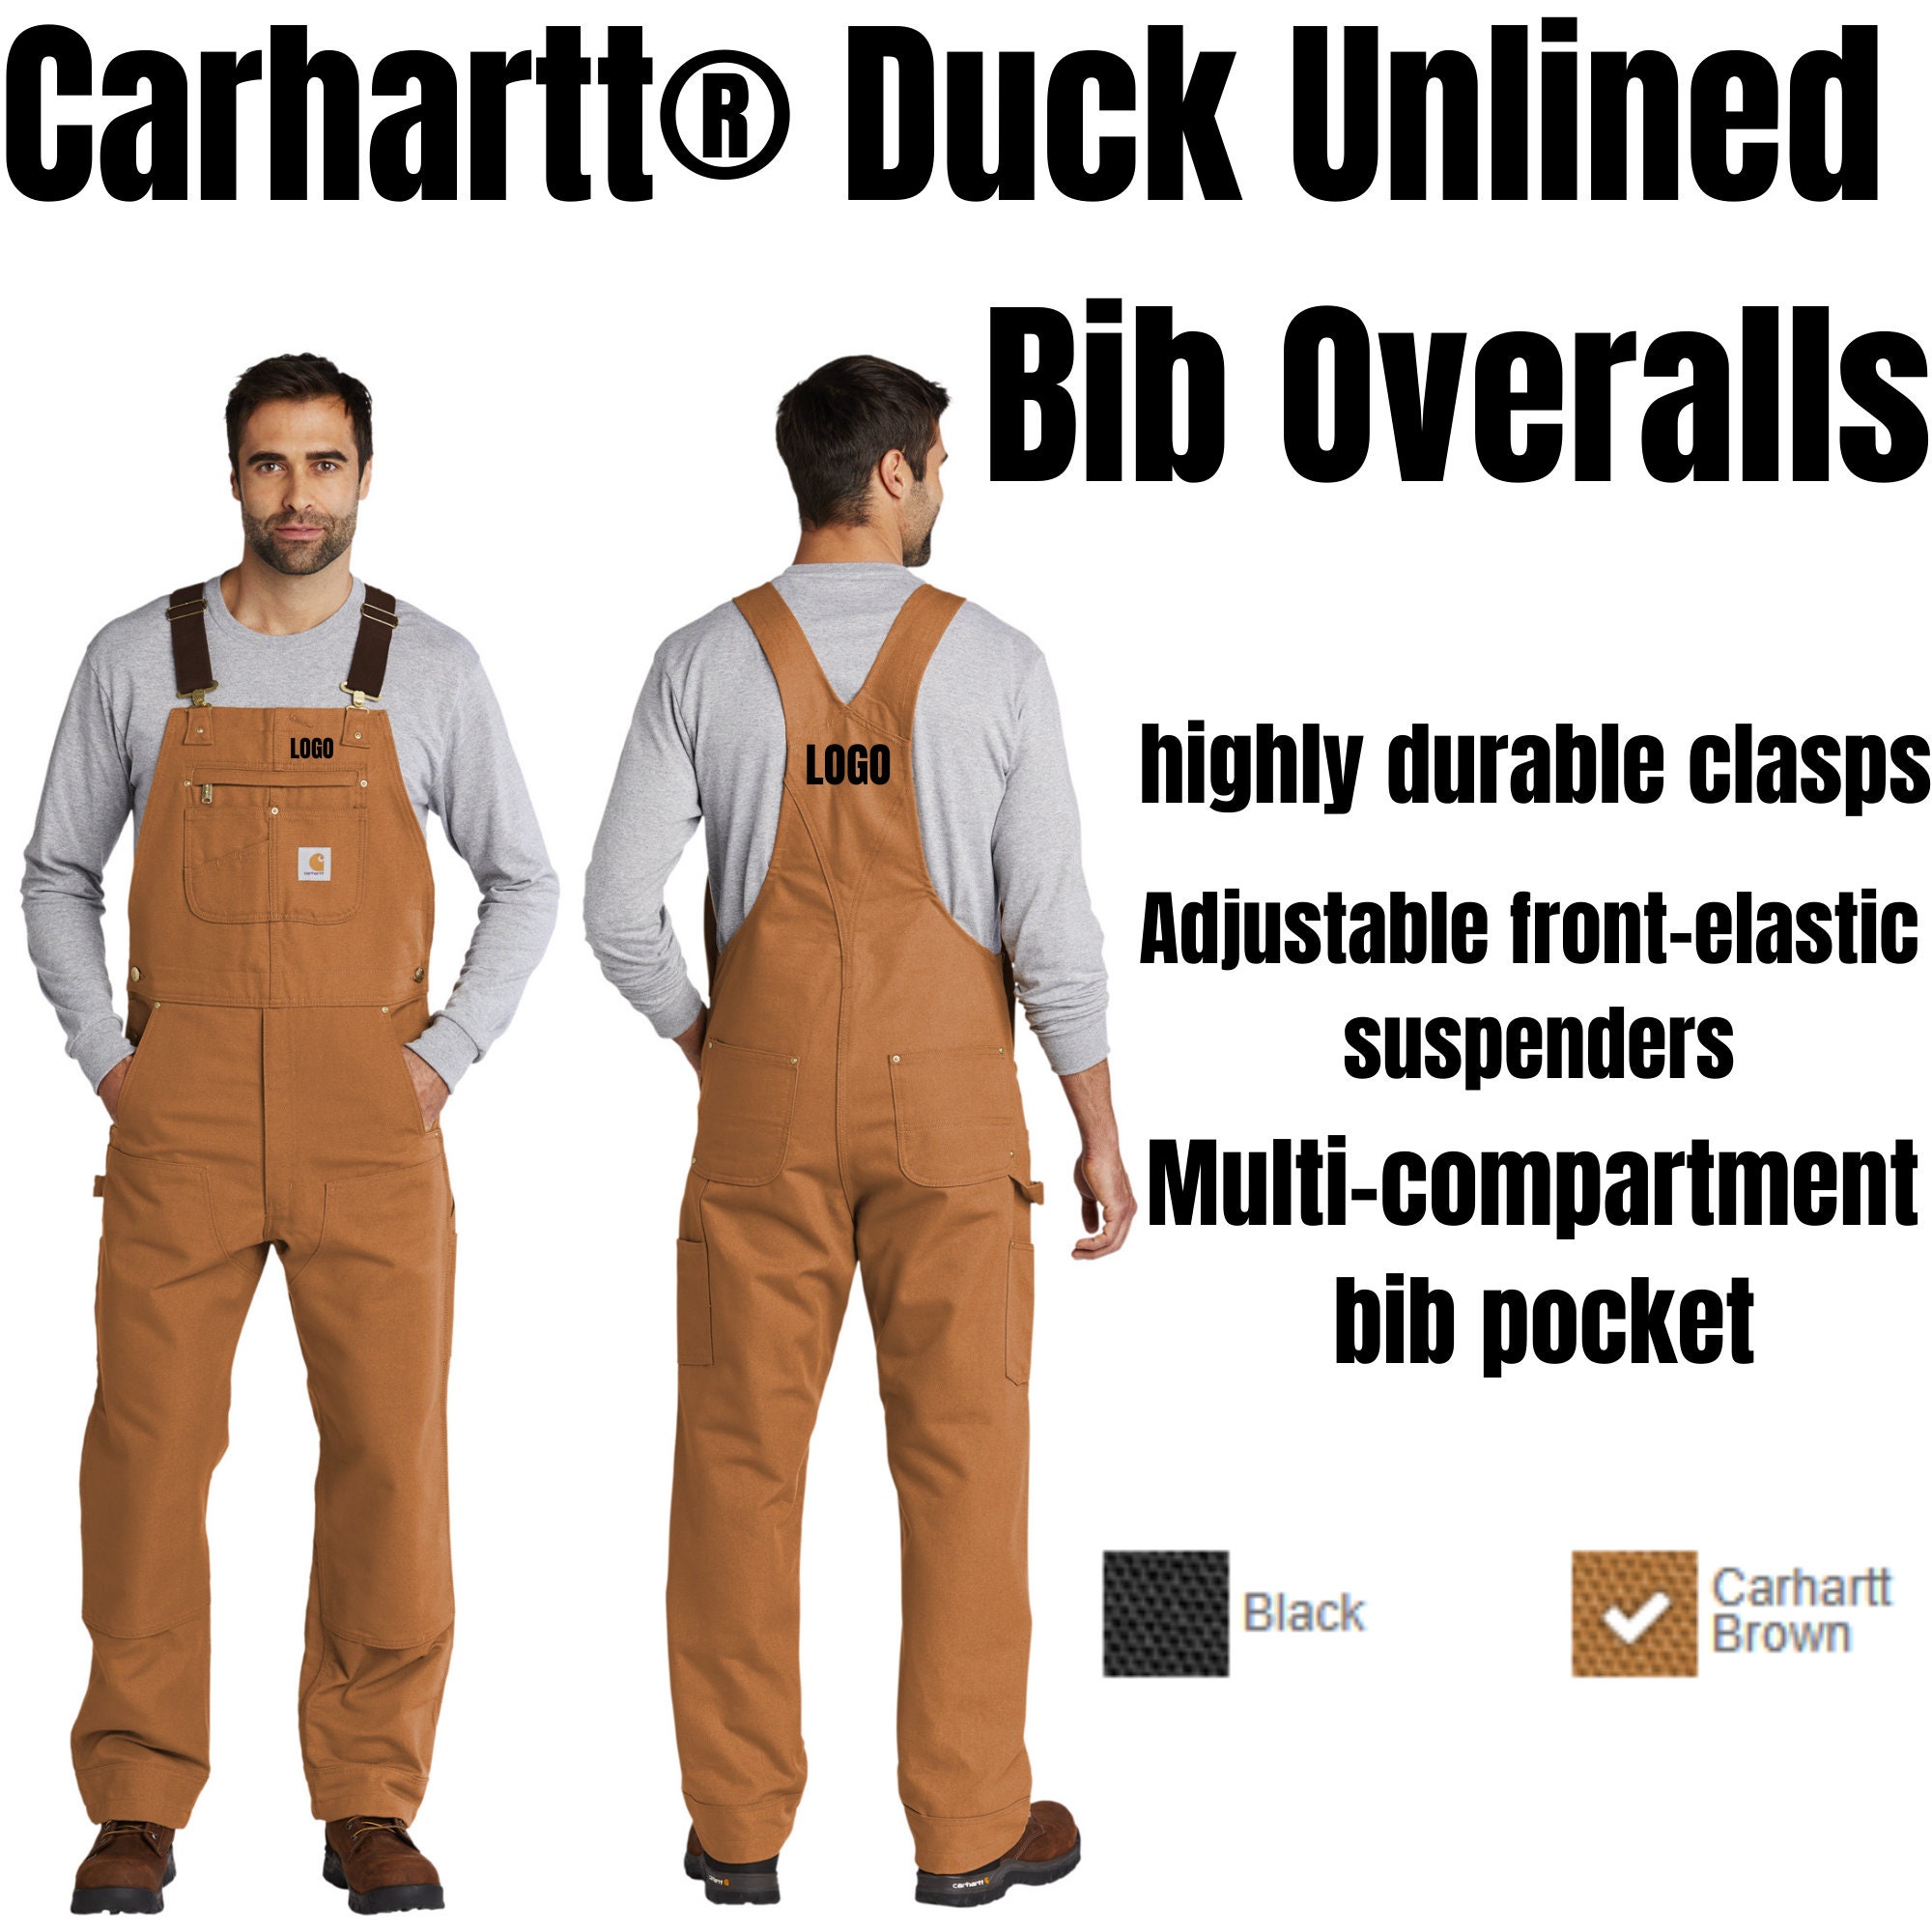 Personalized Carhartt® Duck Unlined Bib Overalls, Customizable